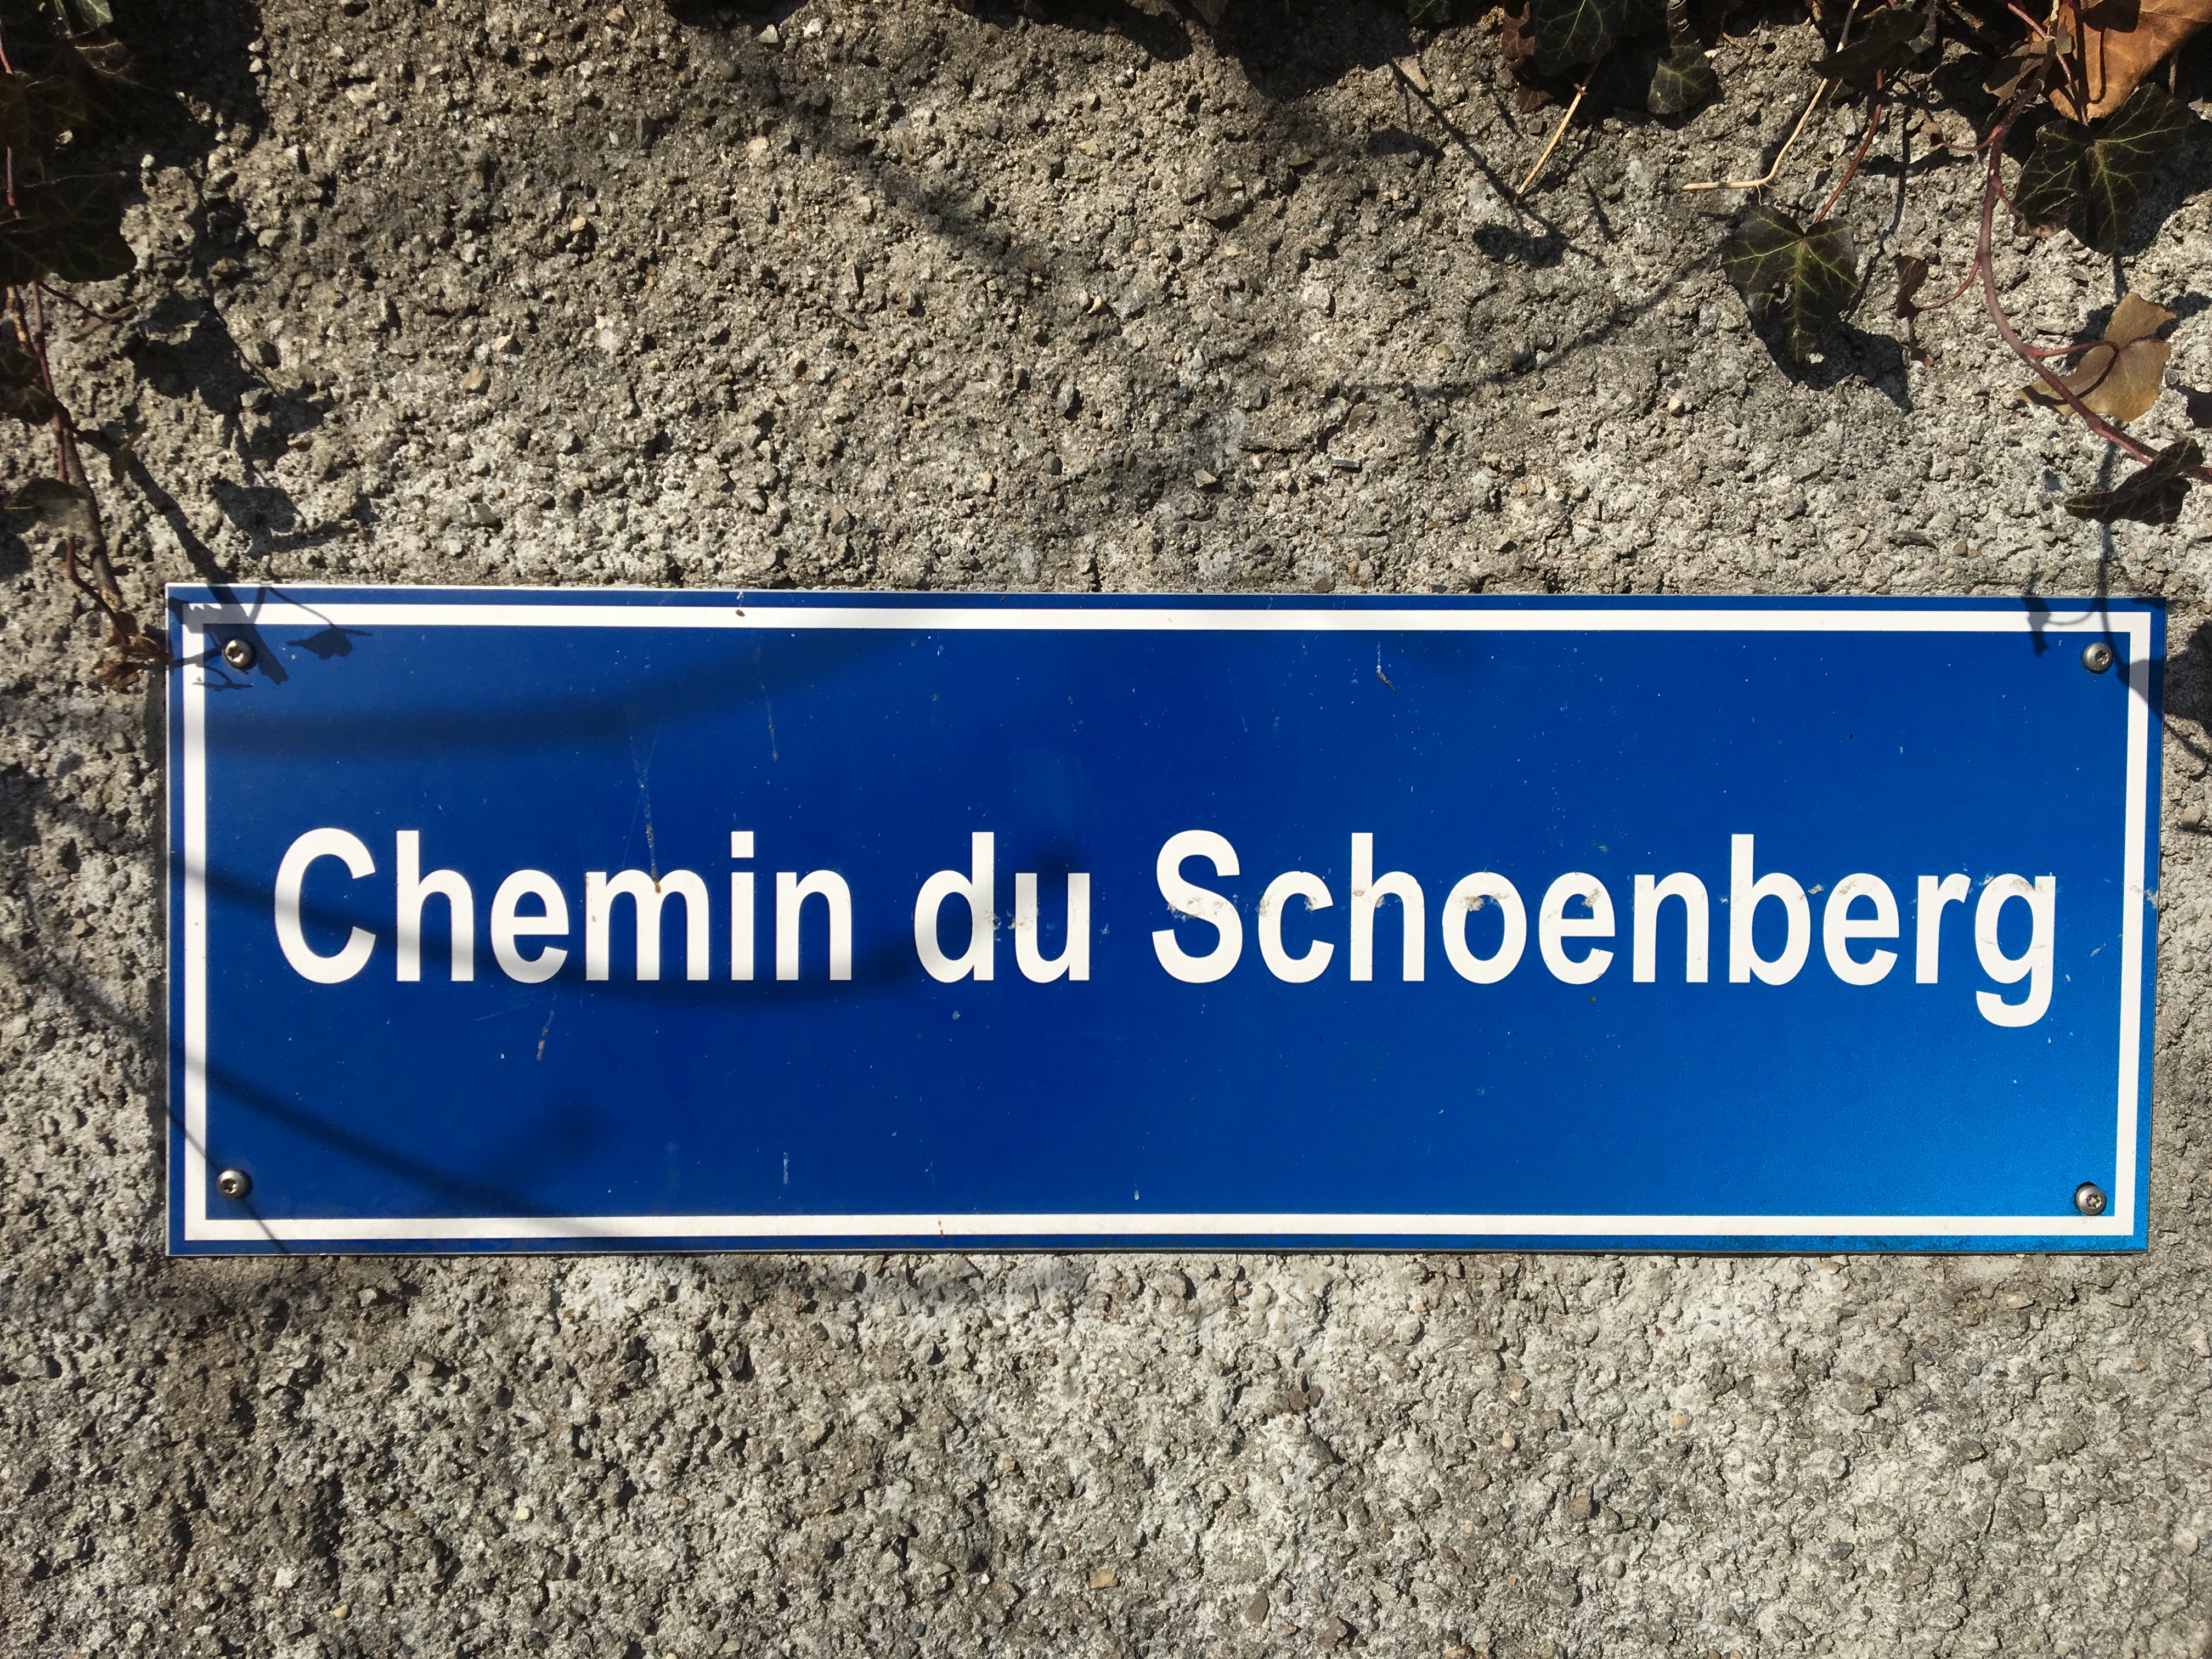 Chemin de Schoenberg sign - Gamesforlanguage.com